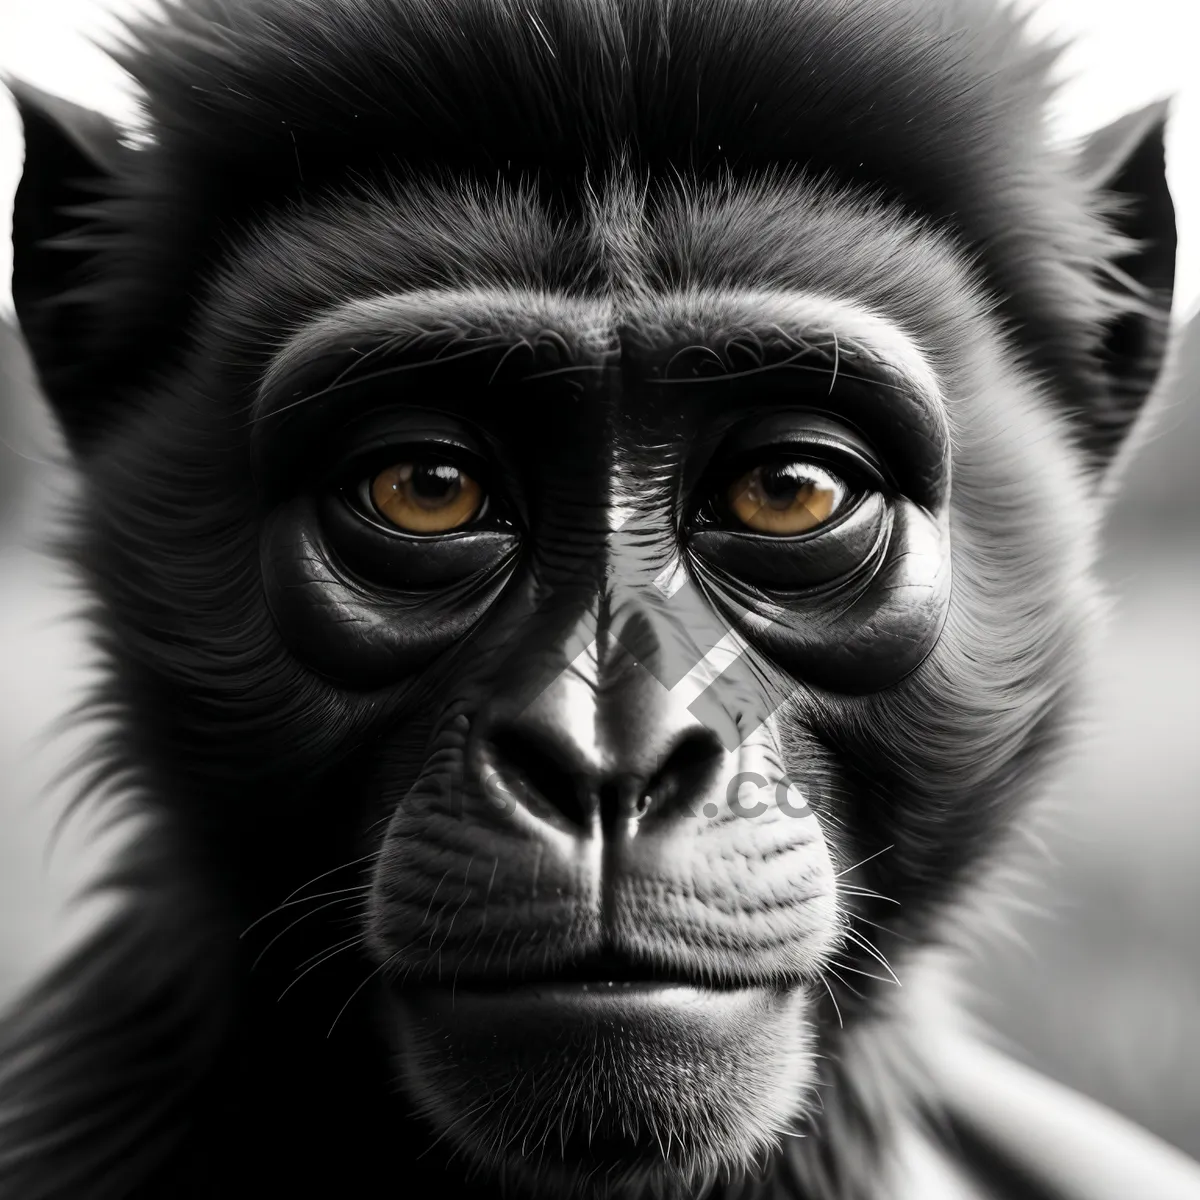 Picture of Wild Primate Faces: Ape, Monkey, Chimpanzee, Gibbon, Gorilla